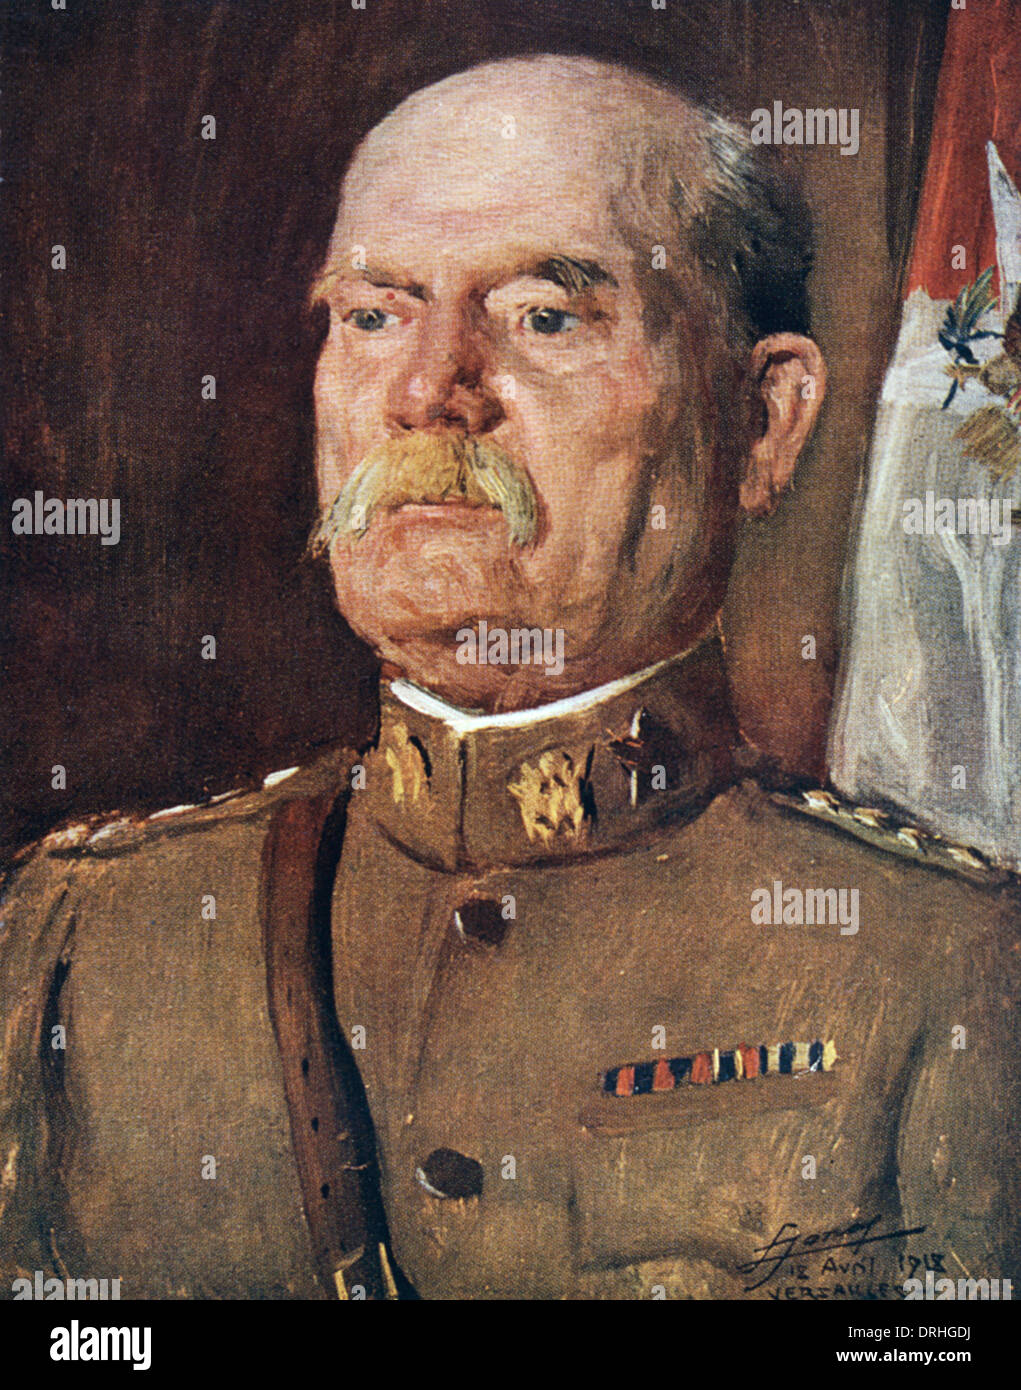 General Bliss, American military, WW1 Stock Photo Alamy